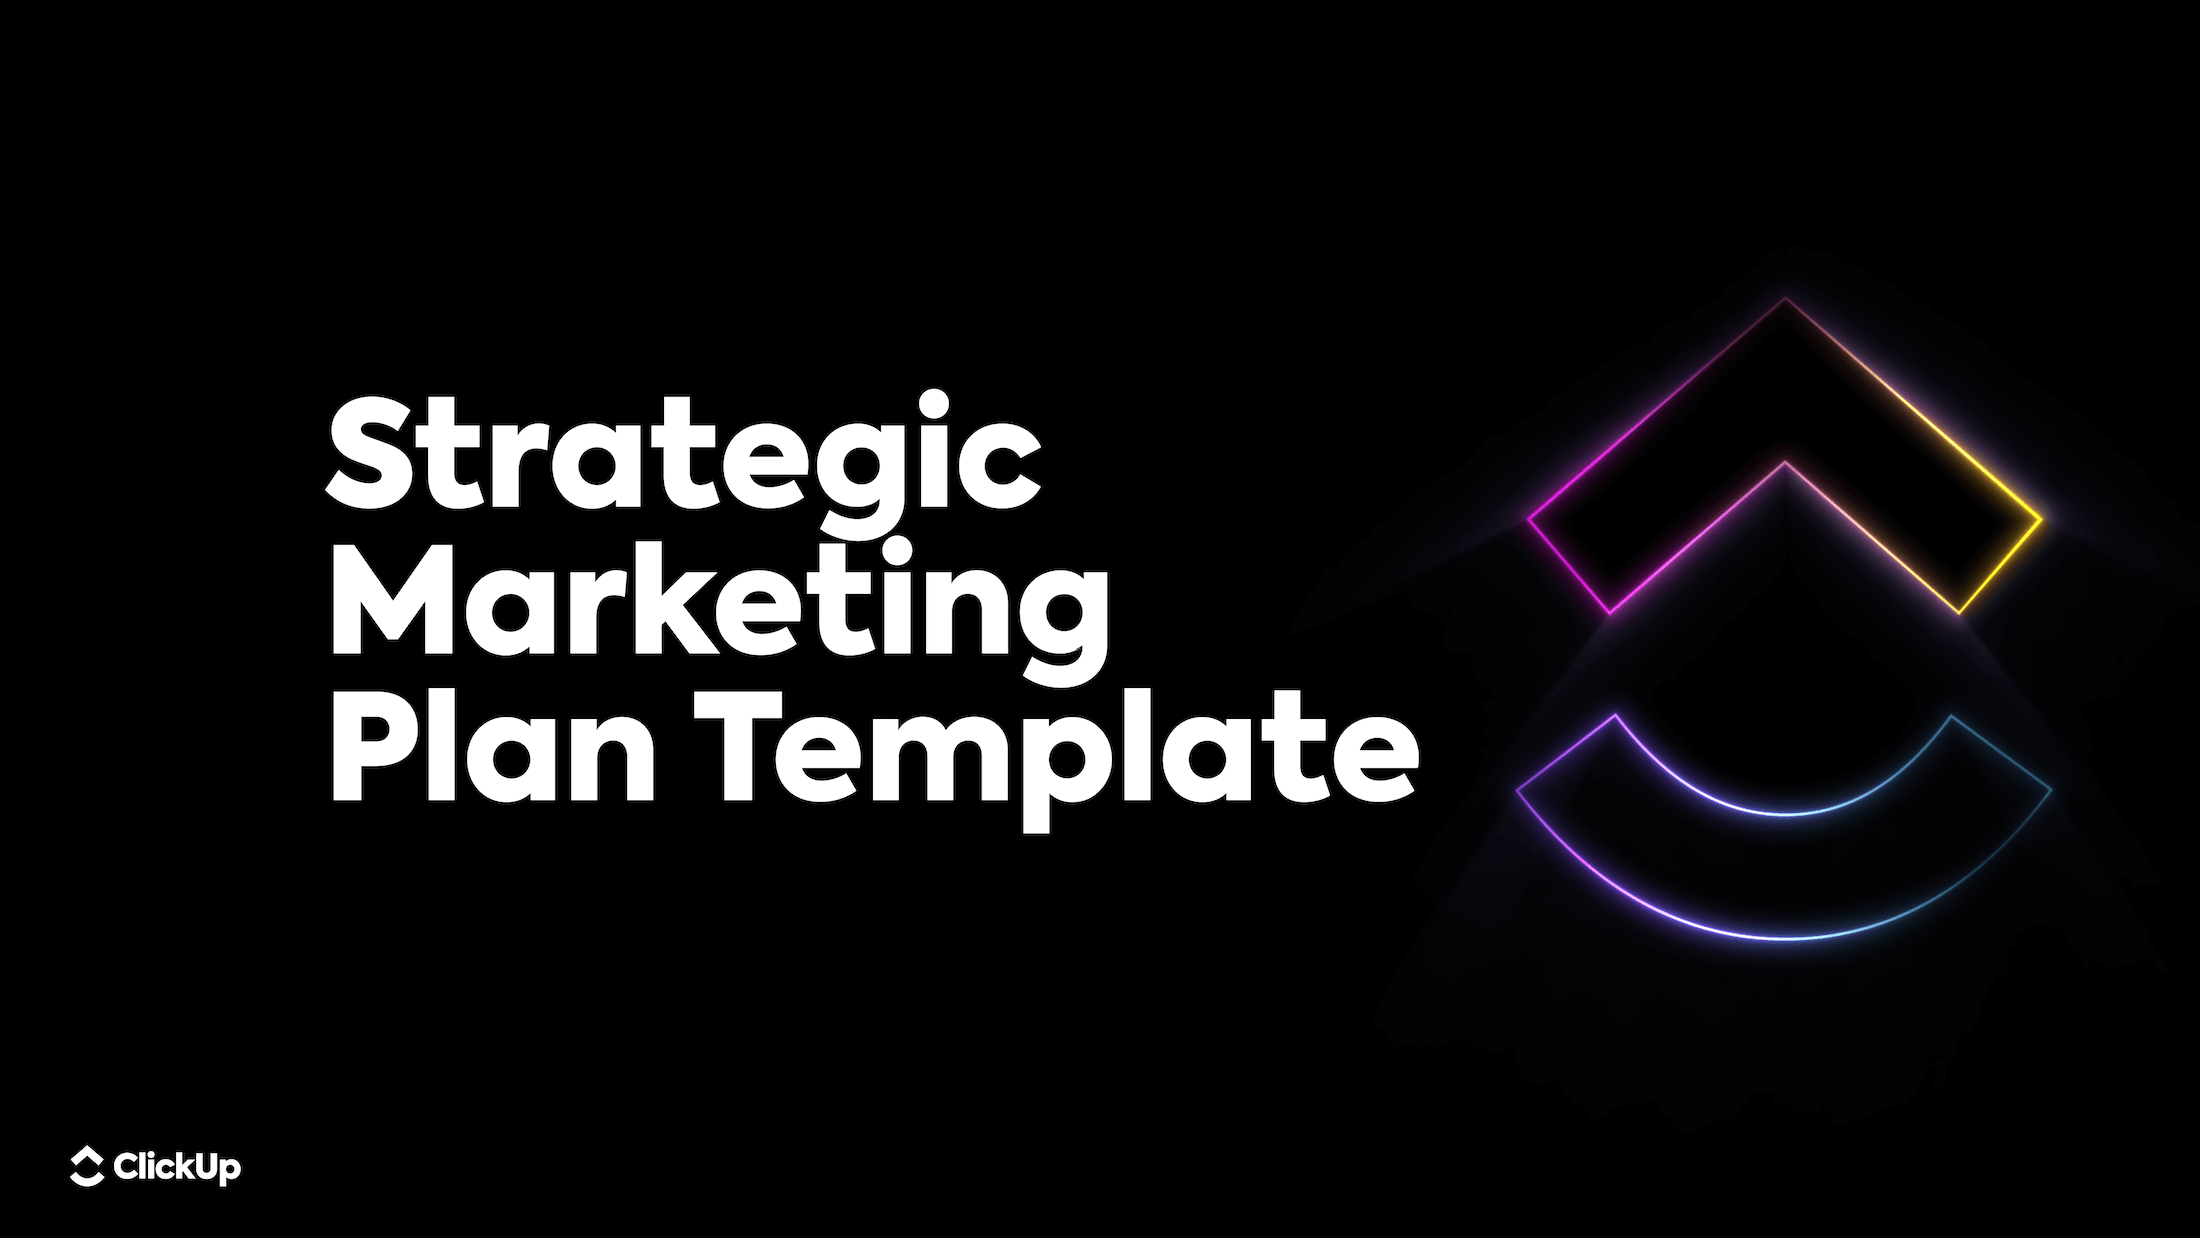 Strategic Marketing Plan Template